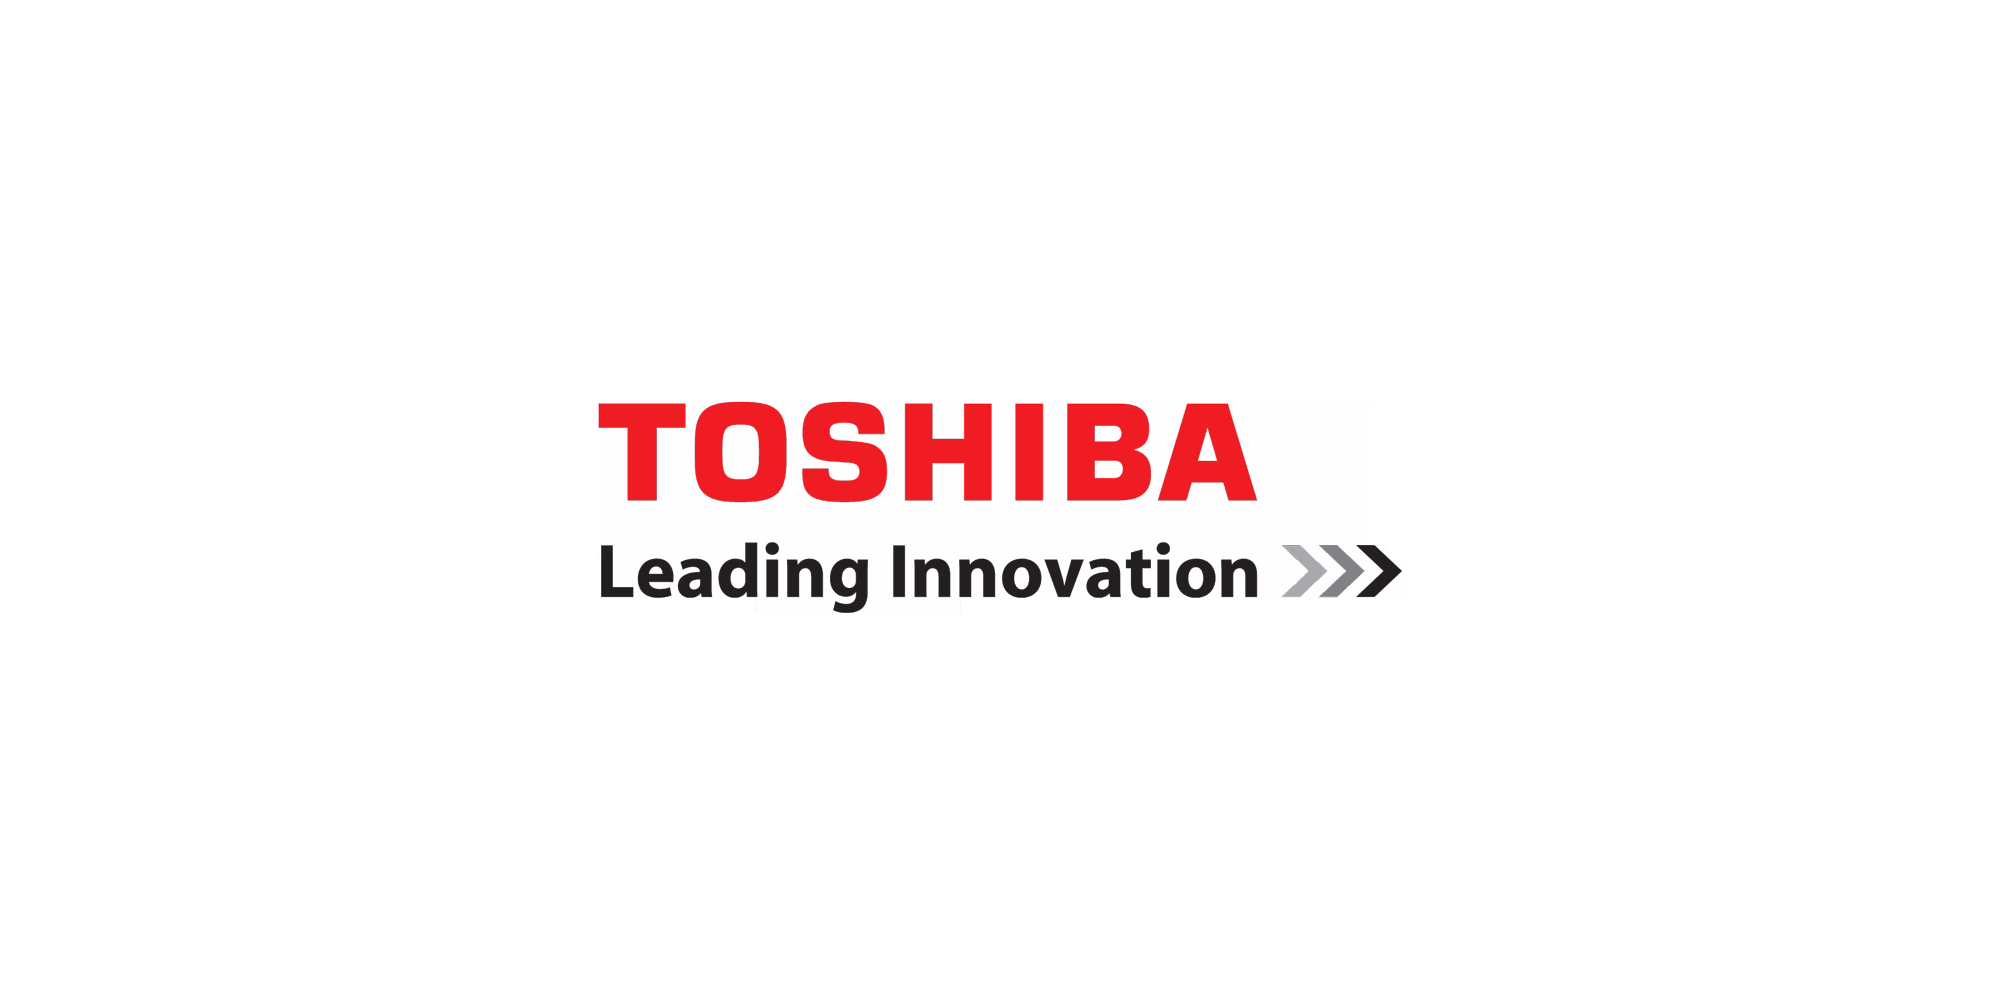 Toshiba Logo - Toshiba-Leading-Innovation-Logo - Imogen Public Relations